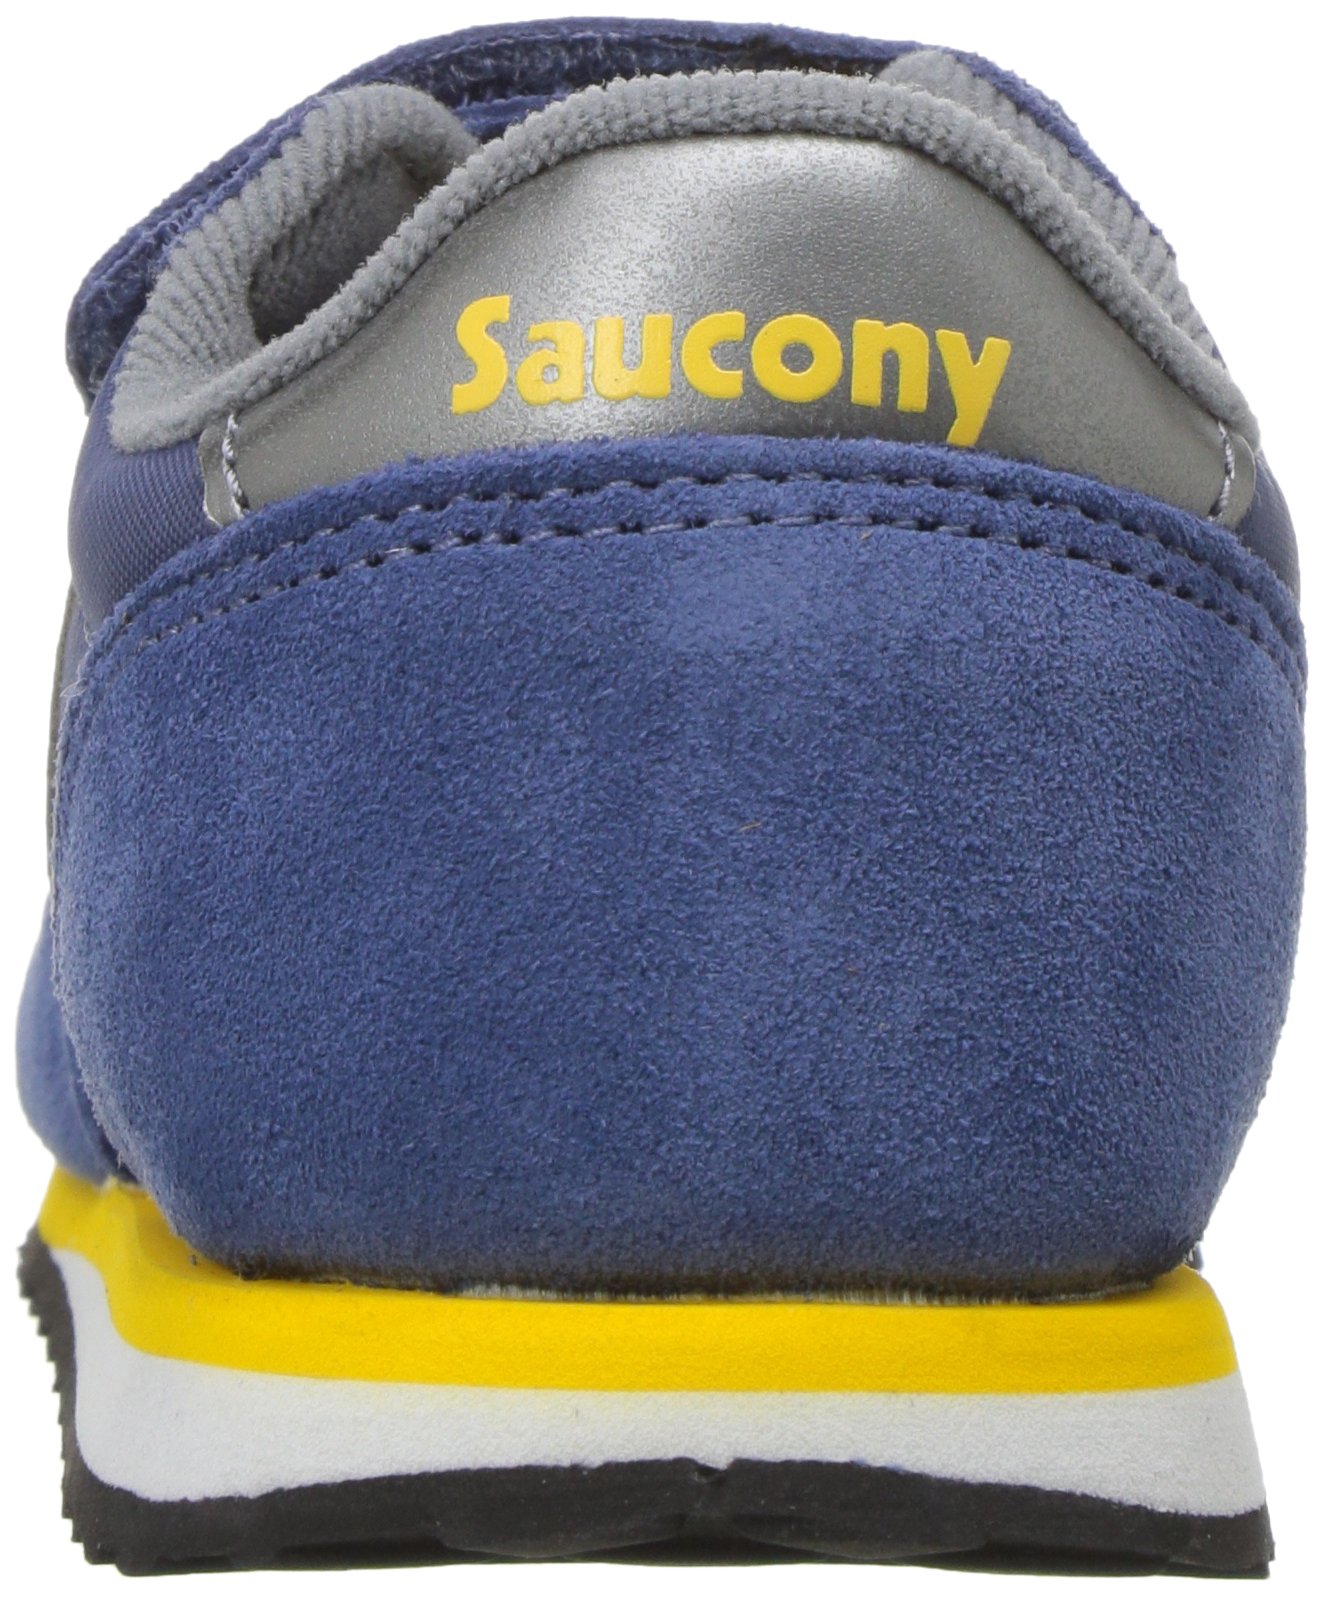 Saucony Unisex-Child Baby Jazz Hl Sneaker